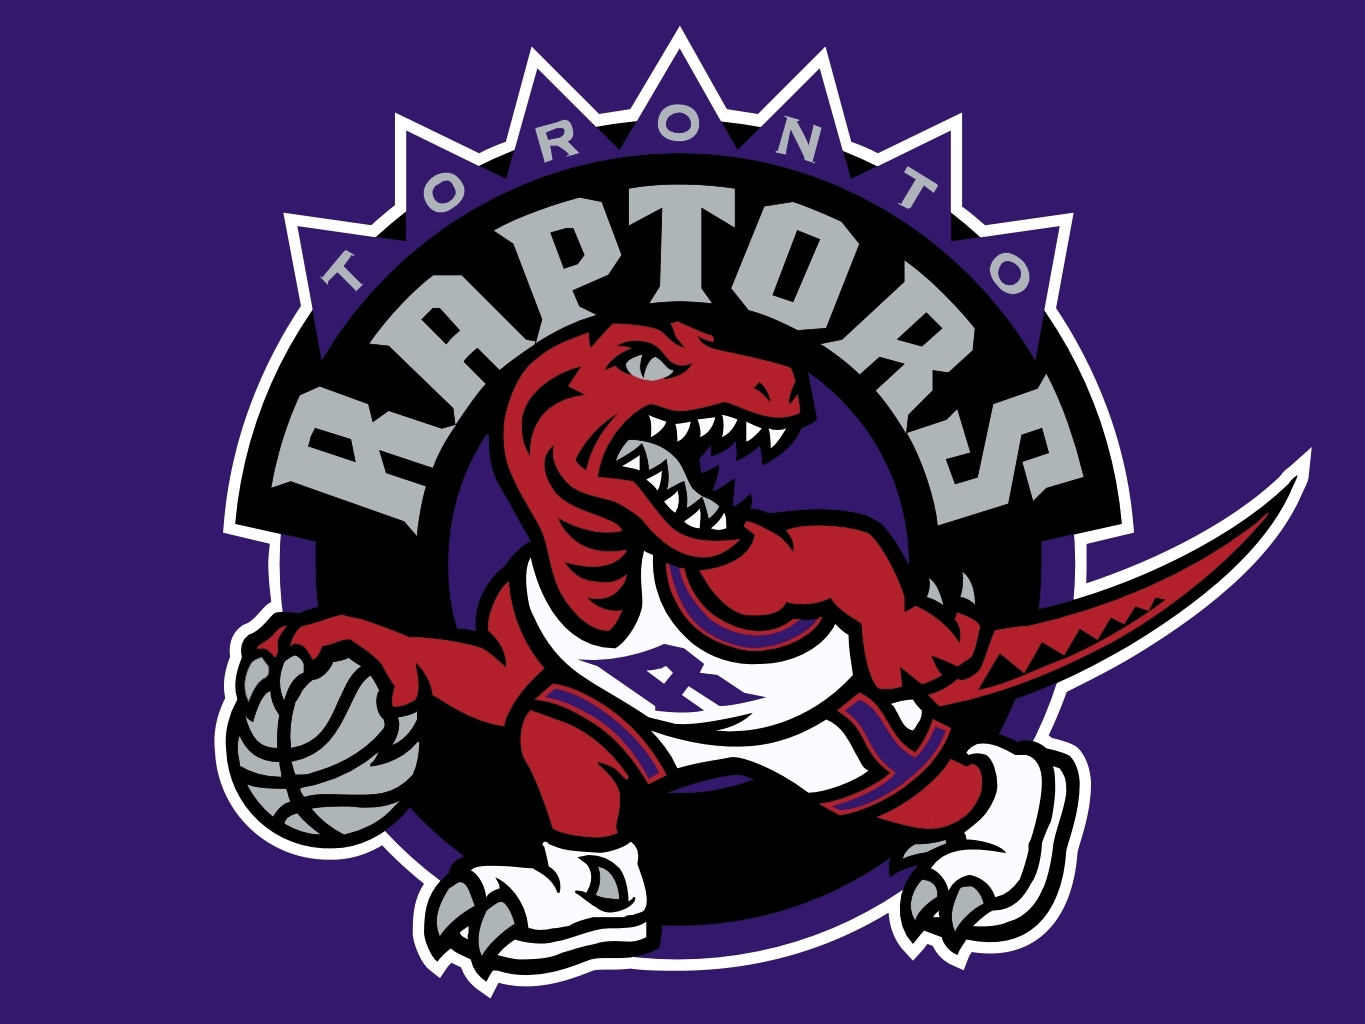 Toronto Raptors Tickets